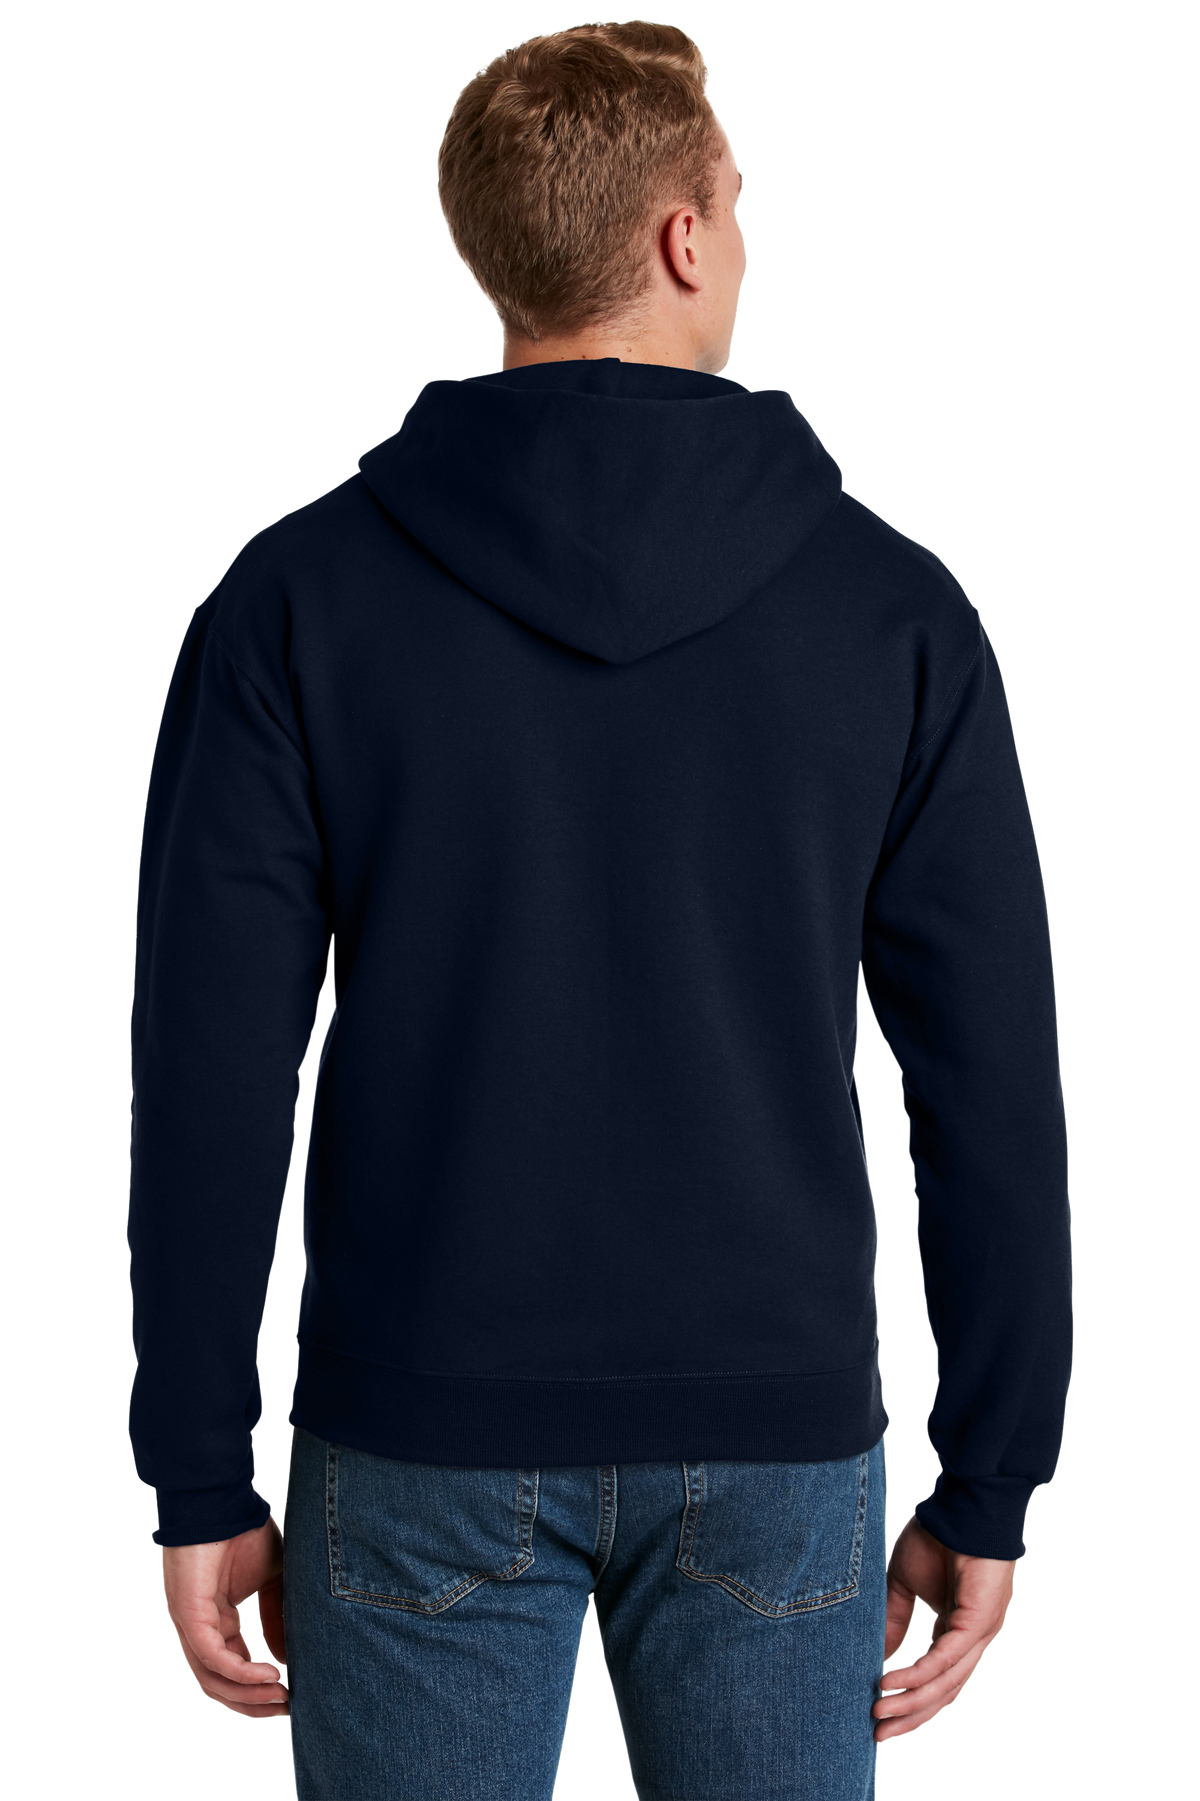 Jerzees Super Sweats NuBlend - Full-Zip Hooded Sweatshirt | Product ...